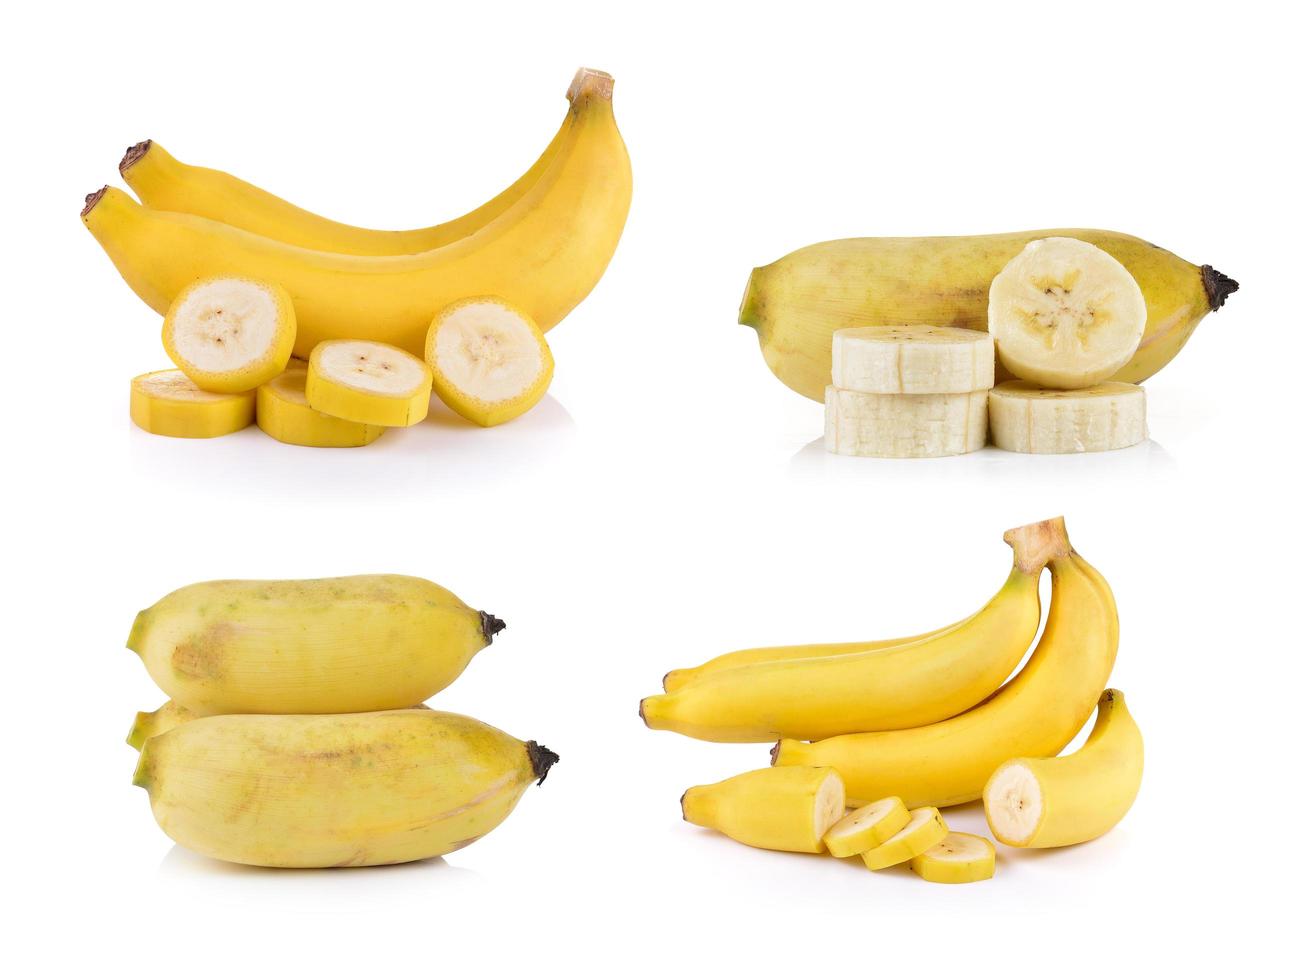 bananer på vit bakgrund foto